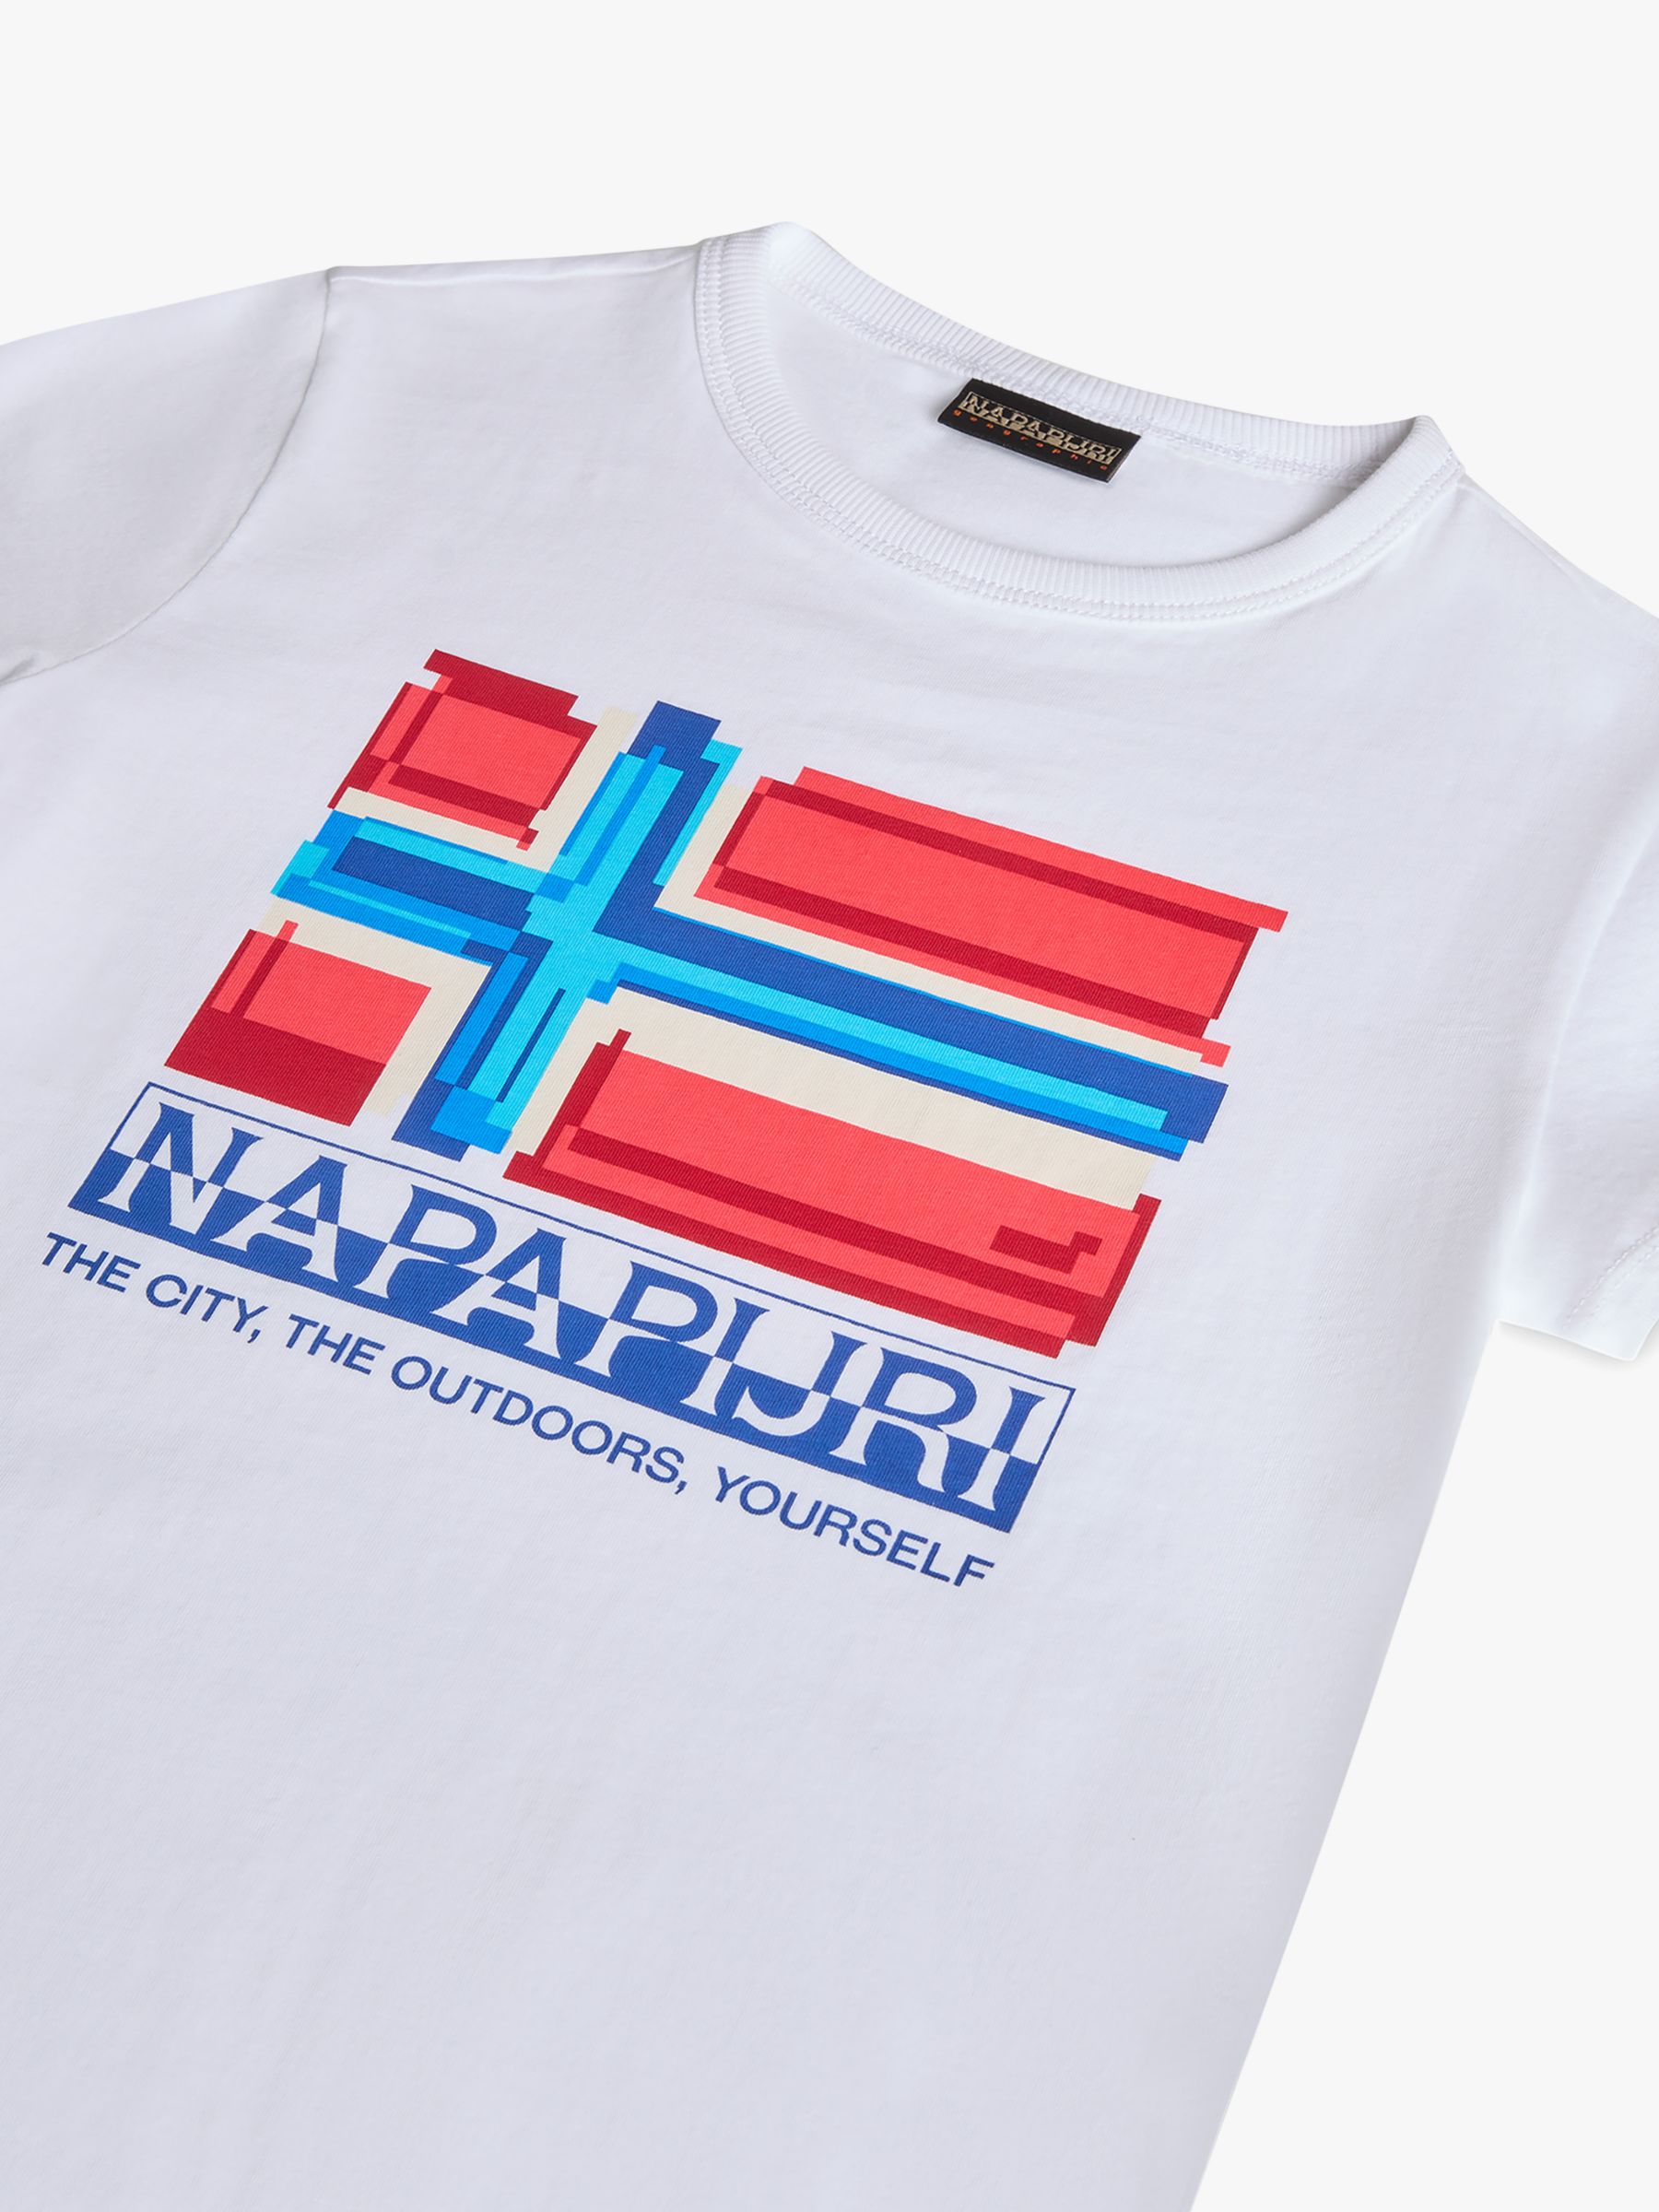 Napapijri Kids' Liard Flag Short Sleeve T-Shirt, White, 16 years